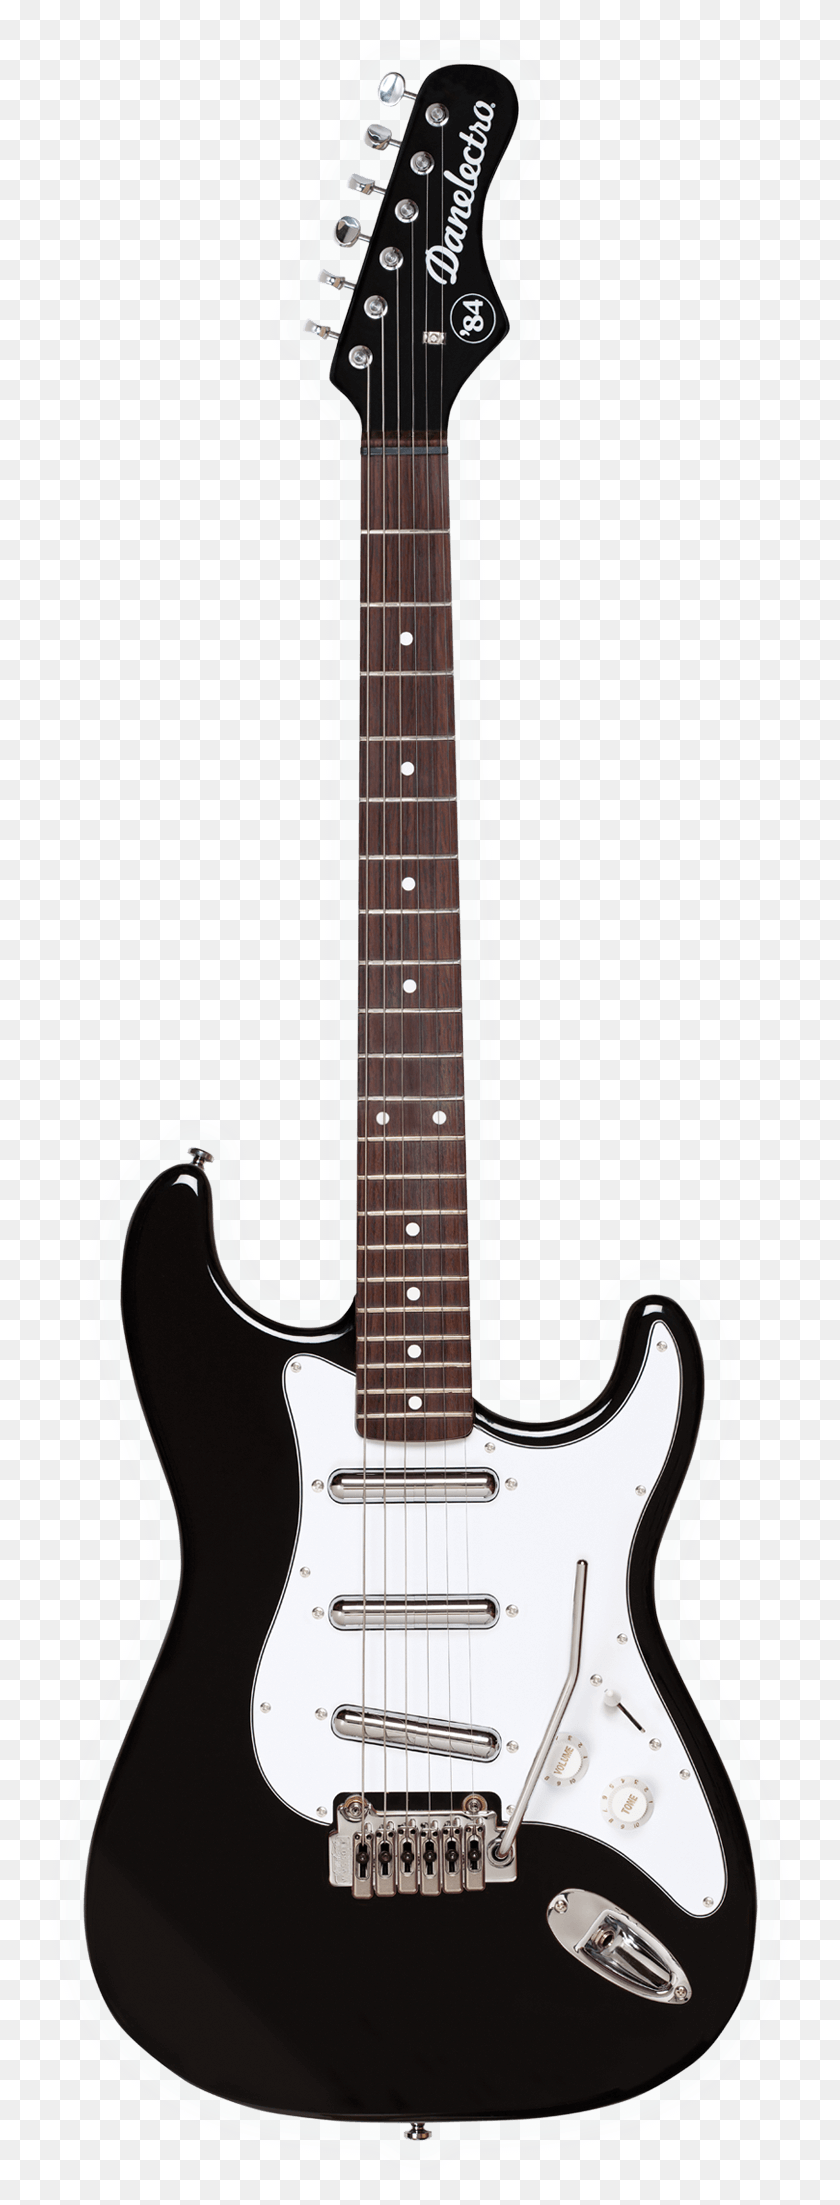 744x2145 Descargar Png Guitarra 1964 Sunburst Fender Stratocaster, Instrumento Musical, Guitarra Eléctrica Hd Png